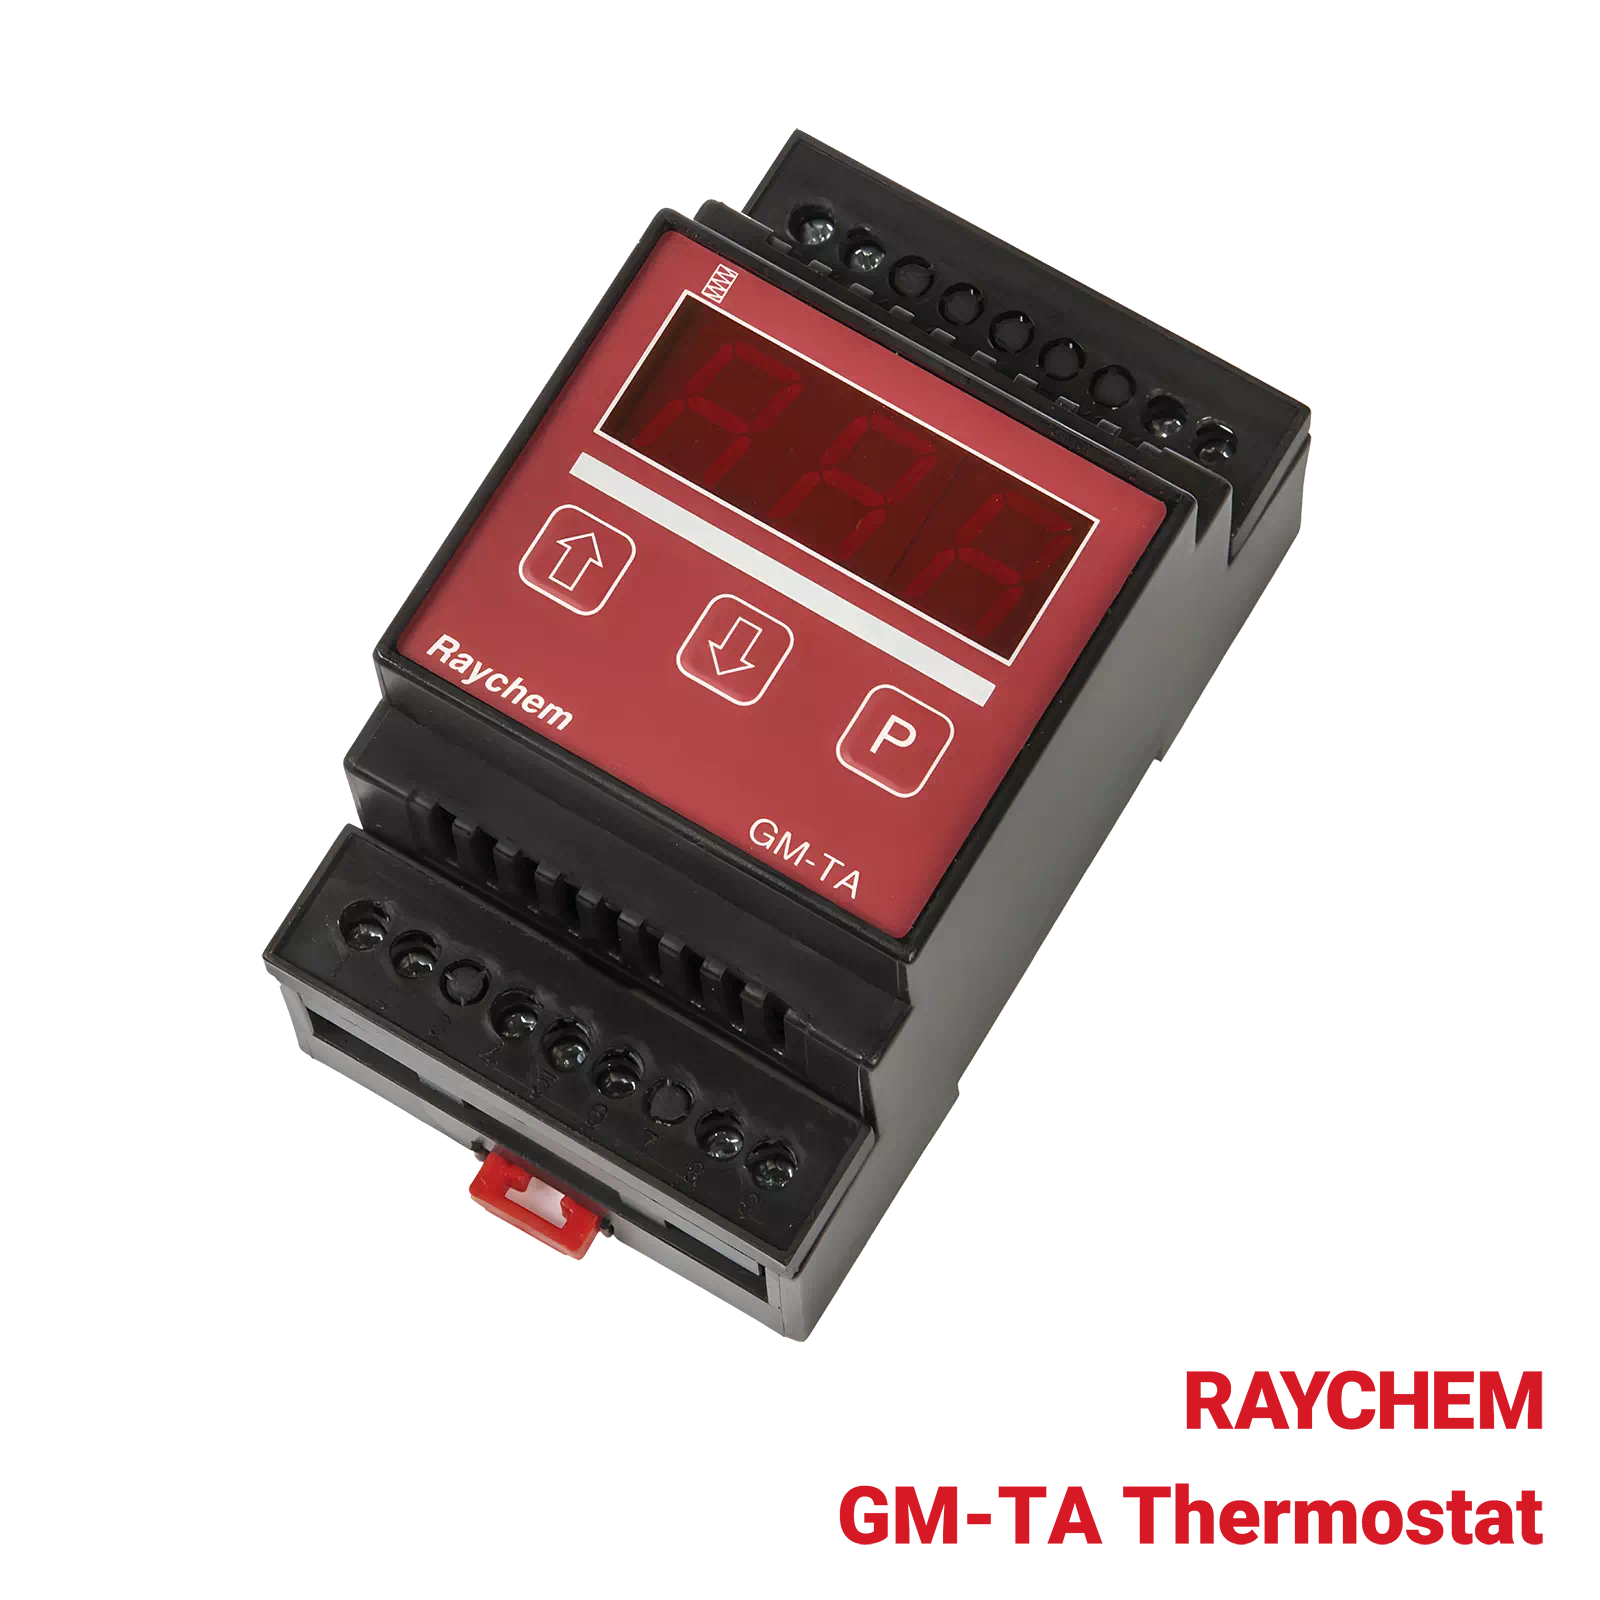 GM-TA-Thermostat-Raychem-Industrial-Heating